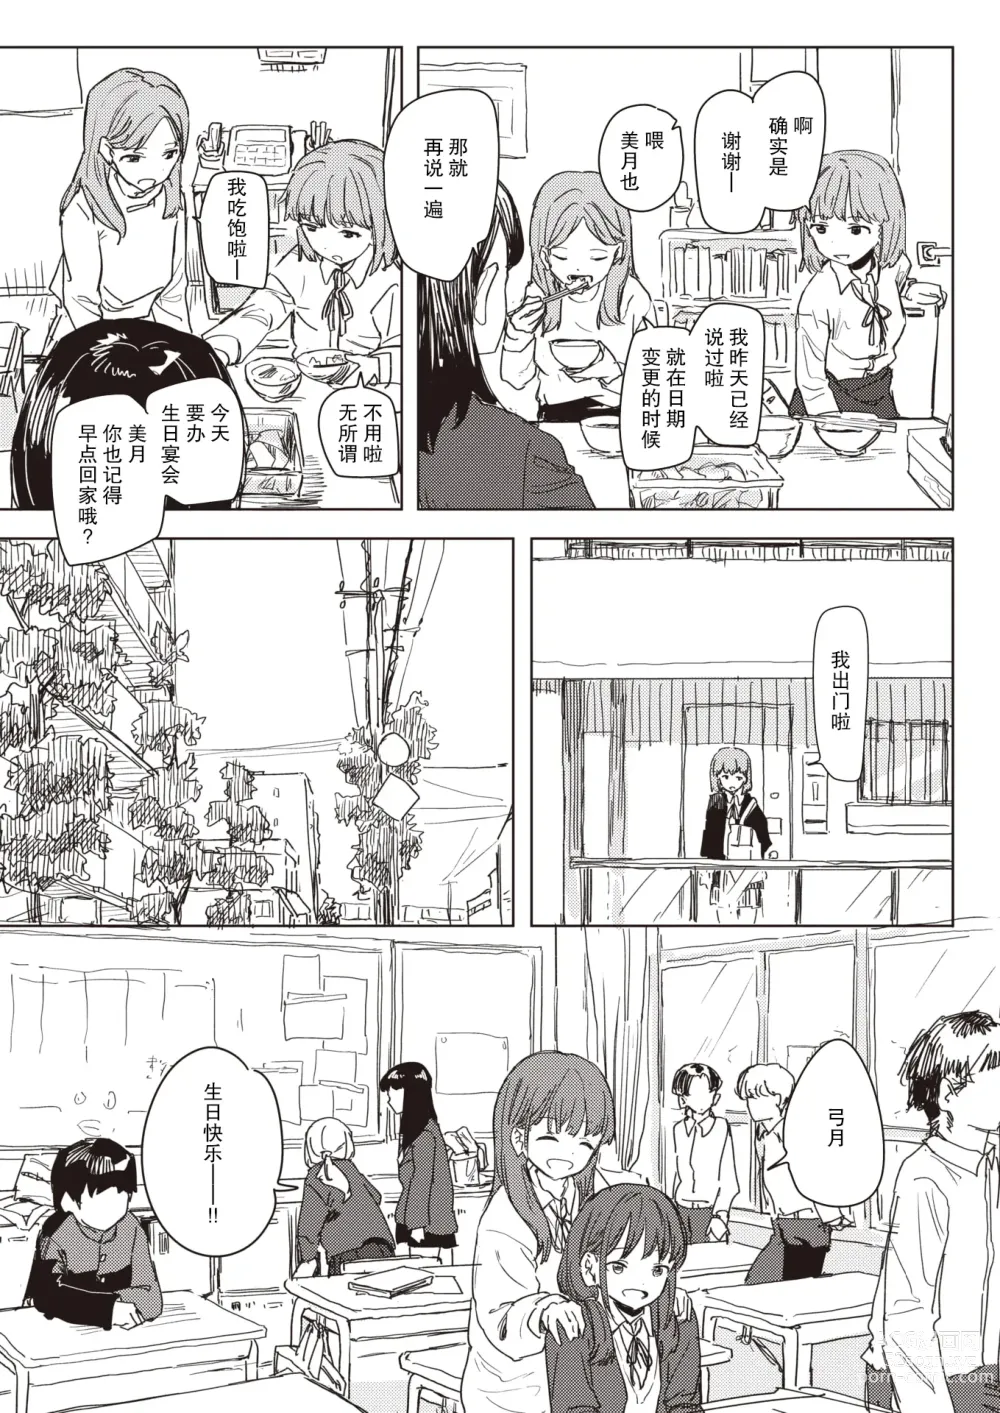 Page 4 of manga Unhappy Birthday